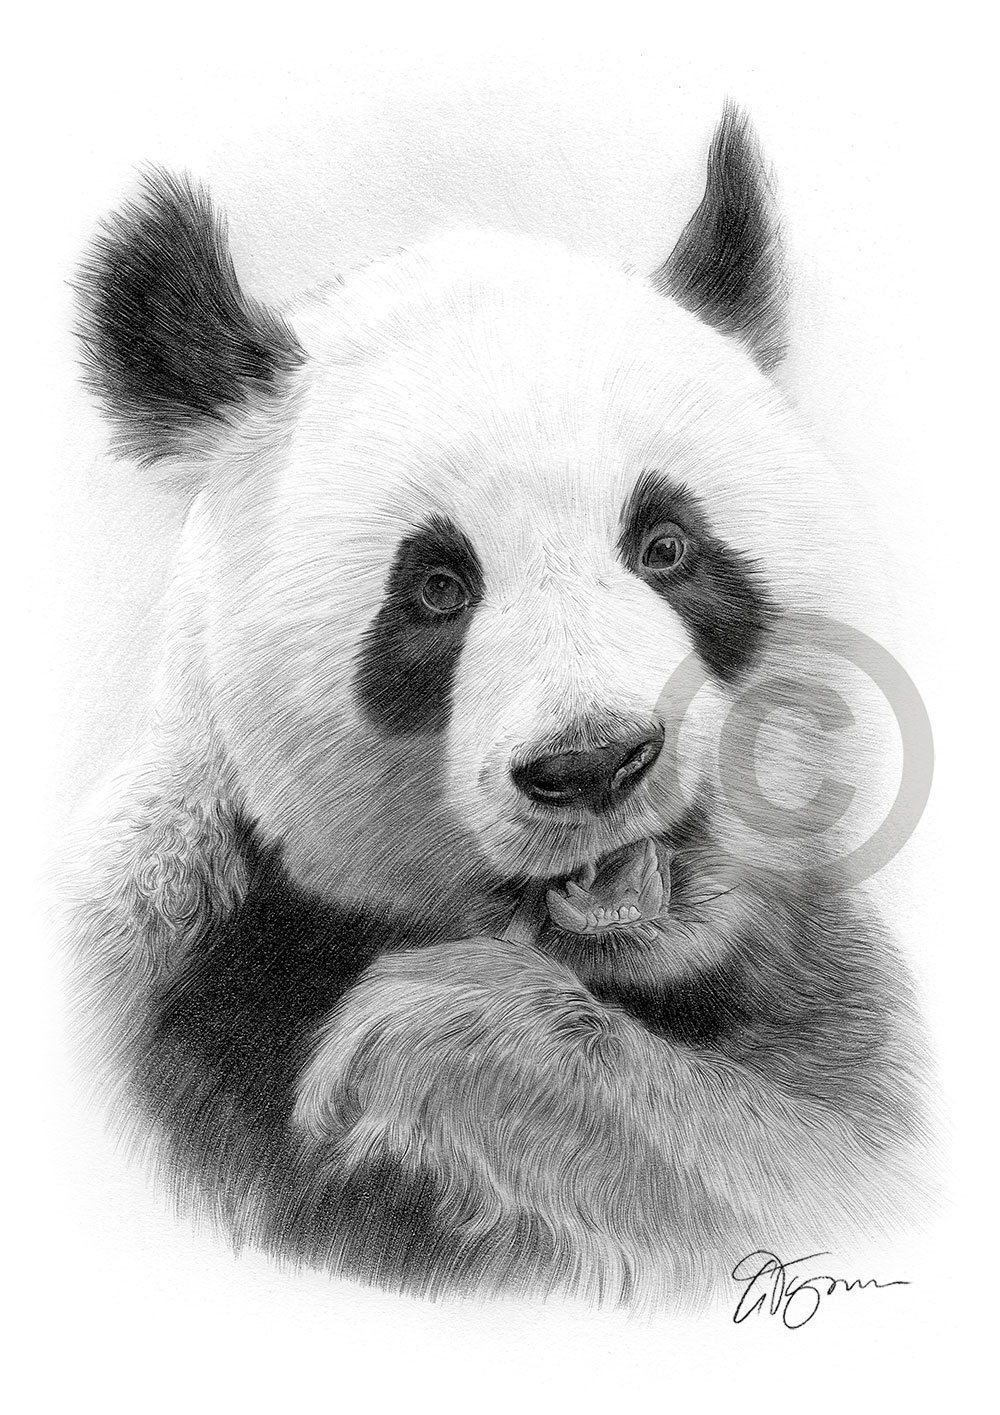 Giant Panda pencil drawing